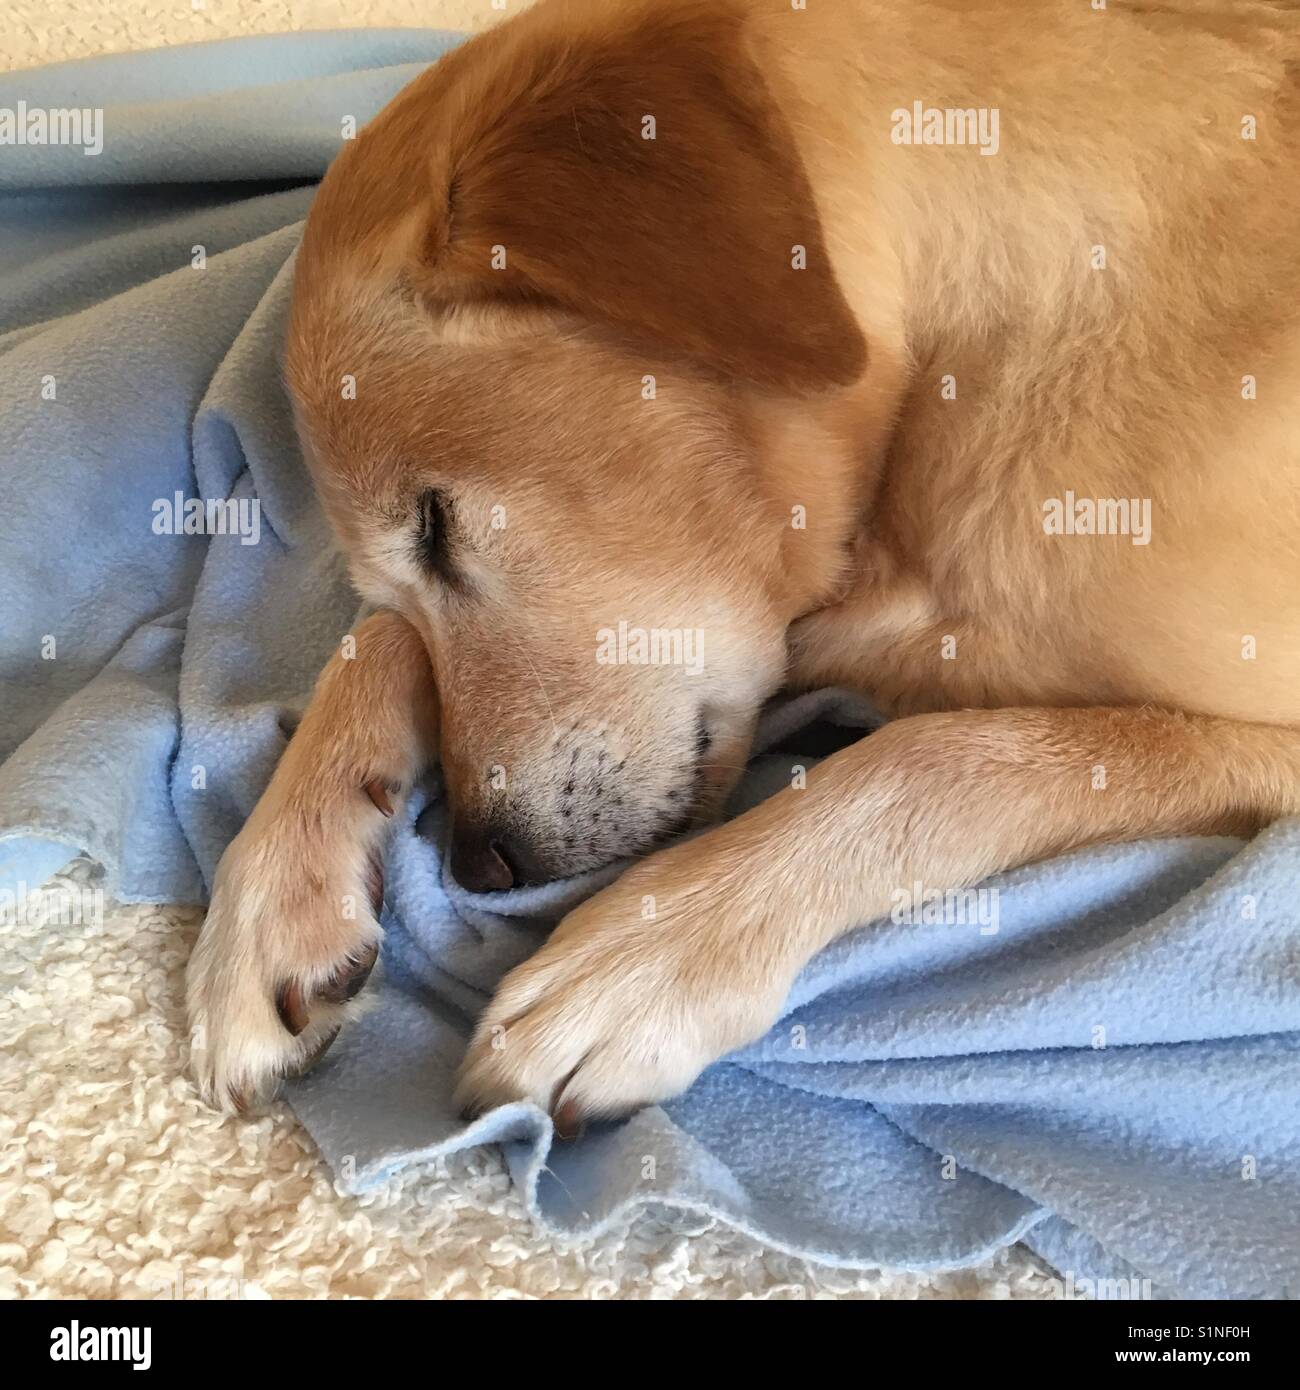 Labrador retriever sleeping Stock Photo